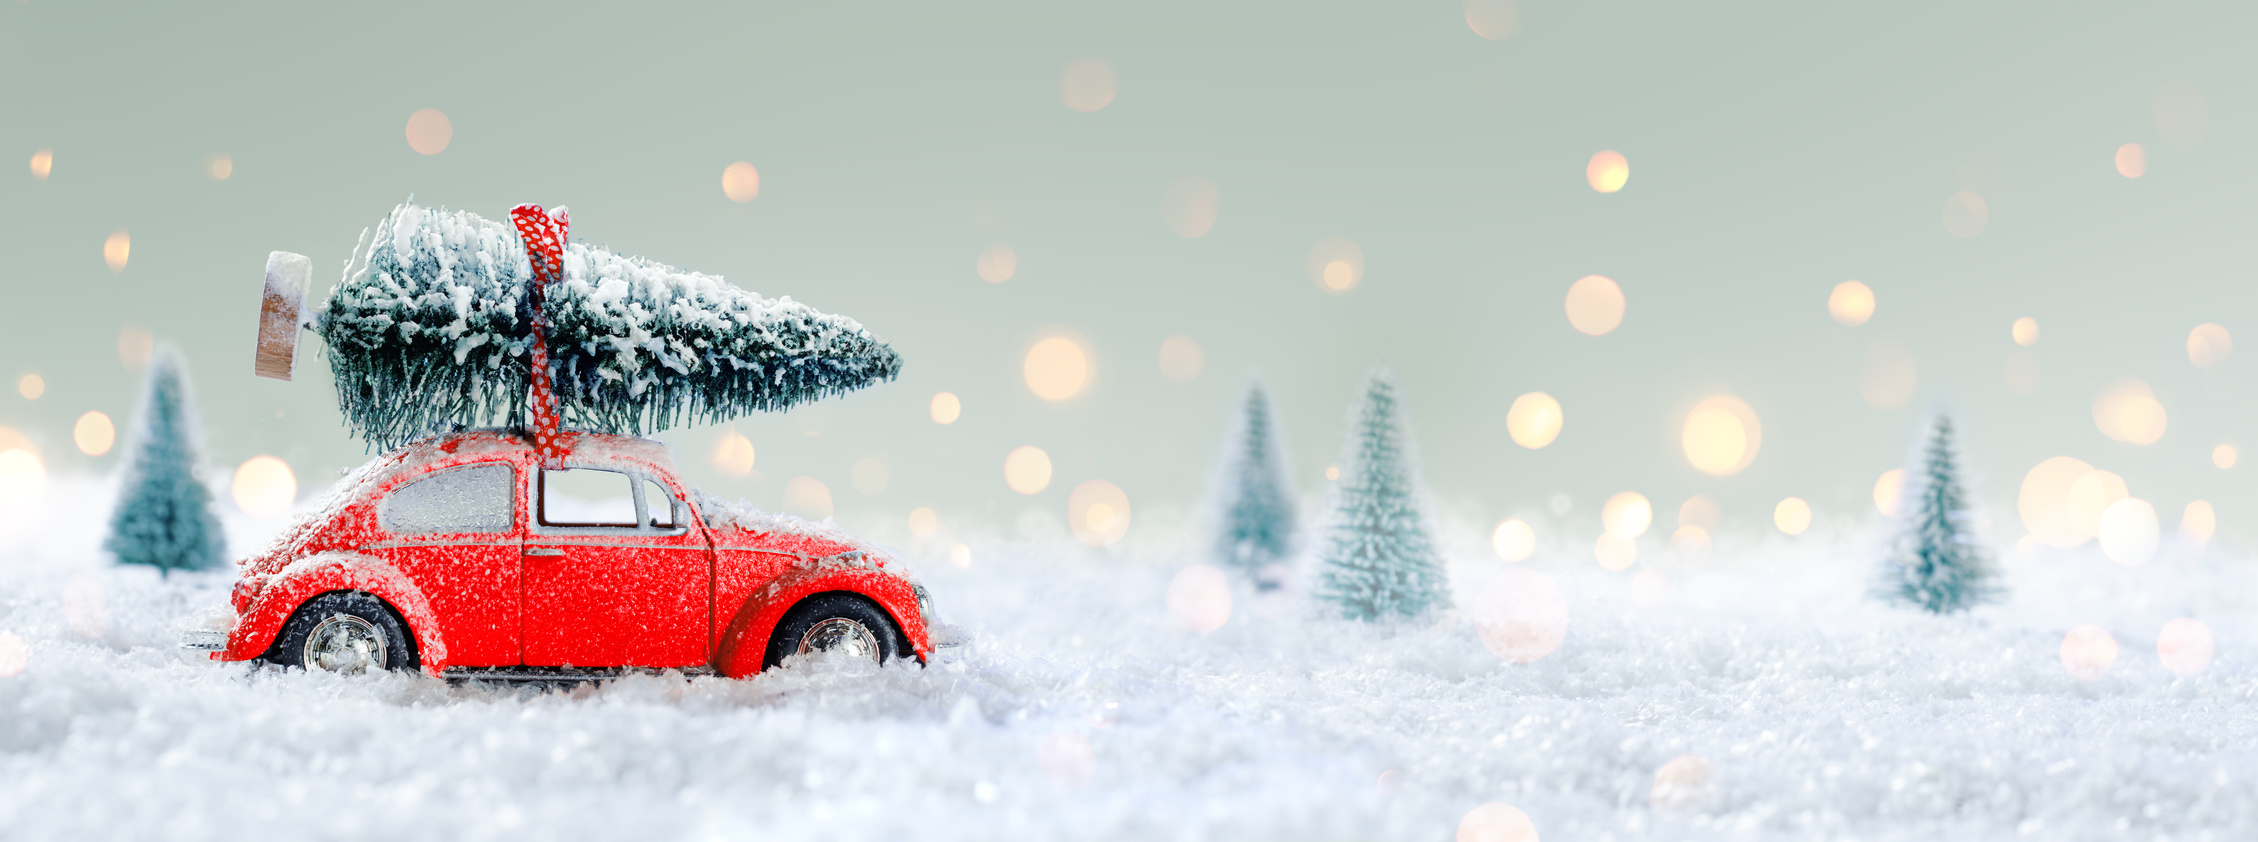 A red car carries a tree through snow.